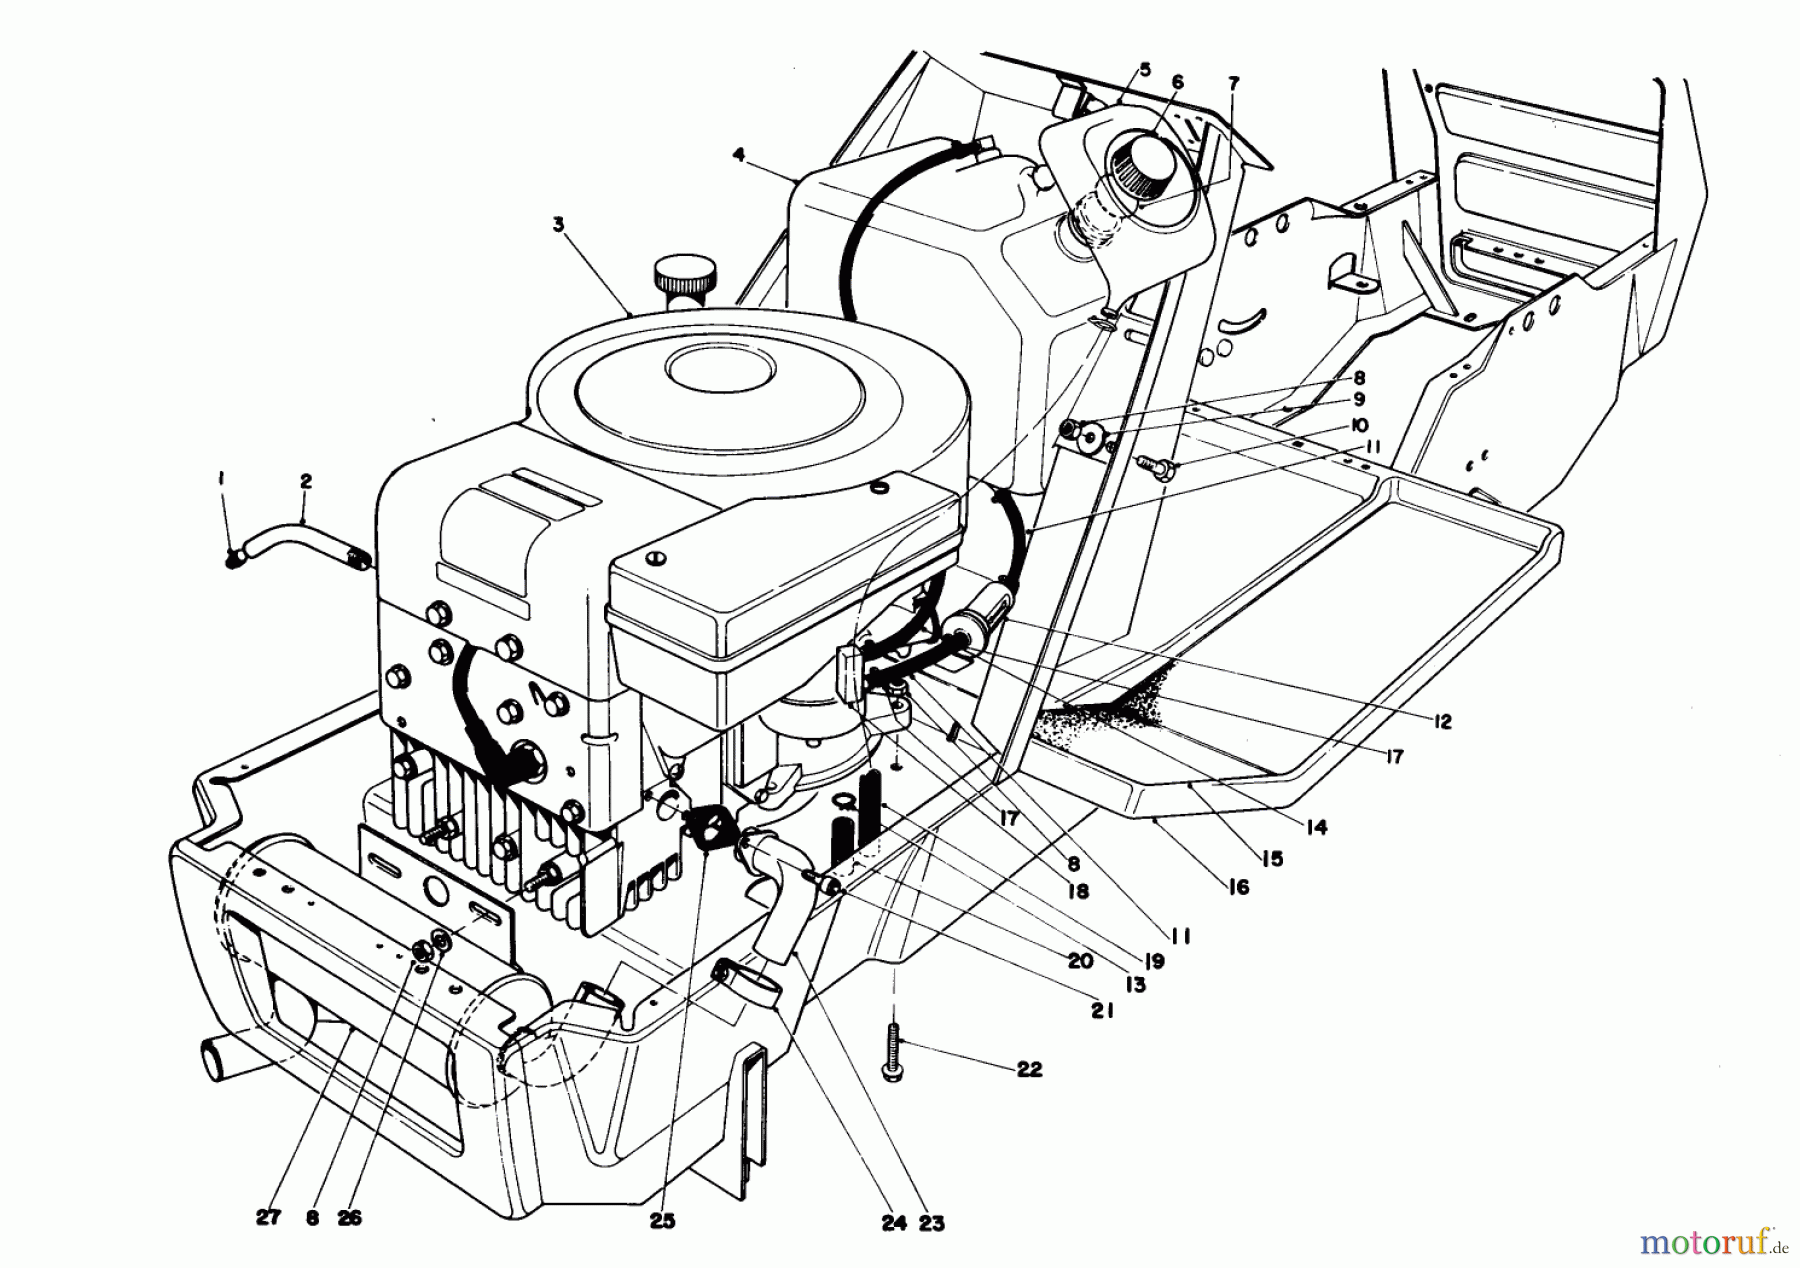  Toro Neu Mowers, Lawn & Garden Tractor Seite 1 57300 (8-32) - Toro 8-32 Front Engine Rider, 1980 (0000001-0999999) ENGINE ASSEMBLY MODEL 57360